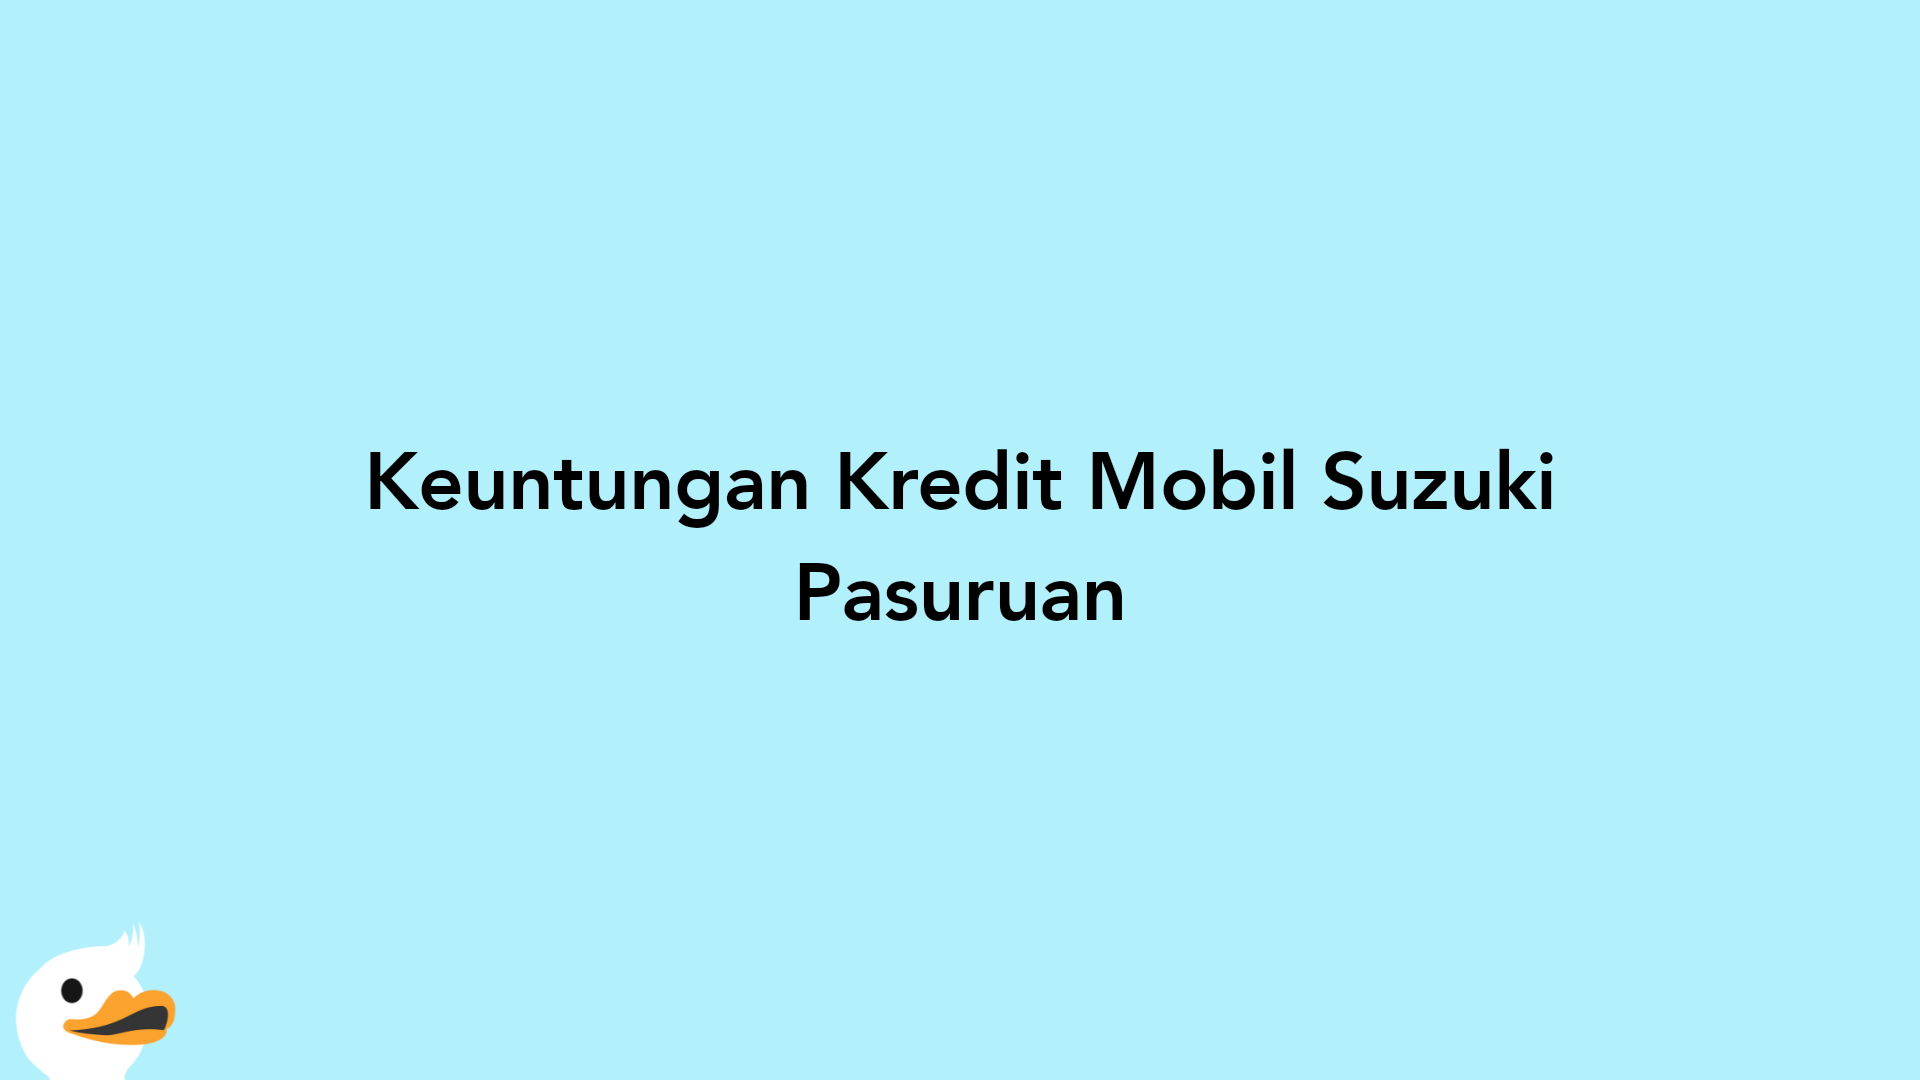 Keuntungan Kredit Mobil Suzuki Pasuruan